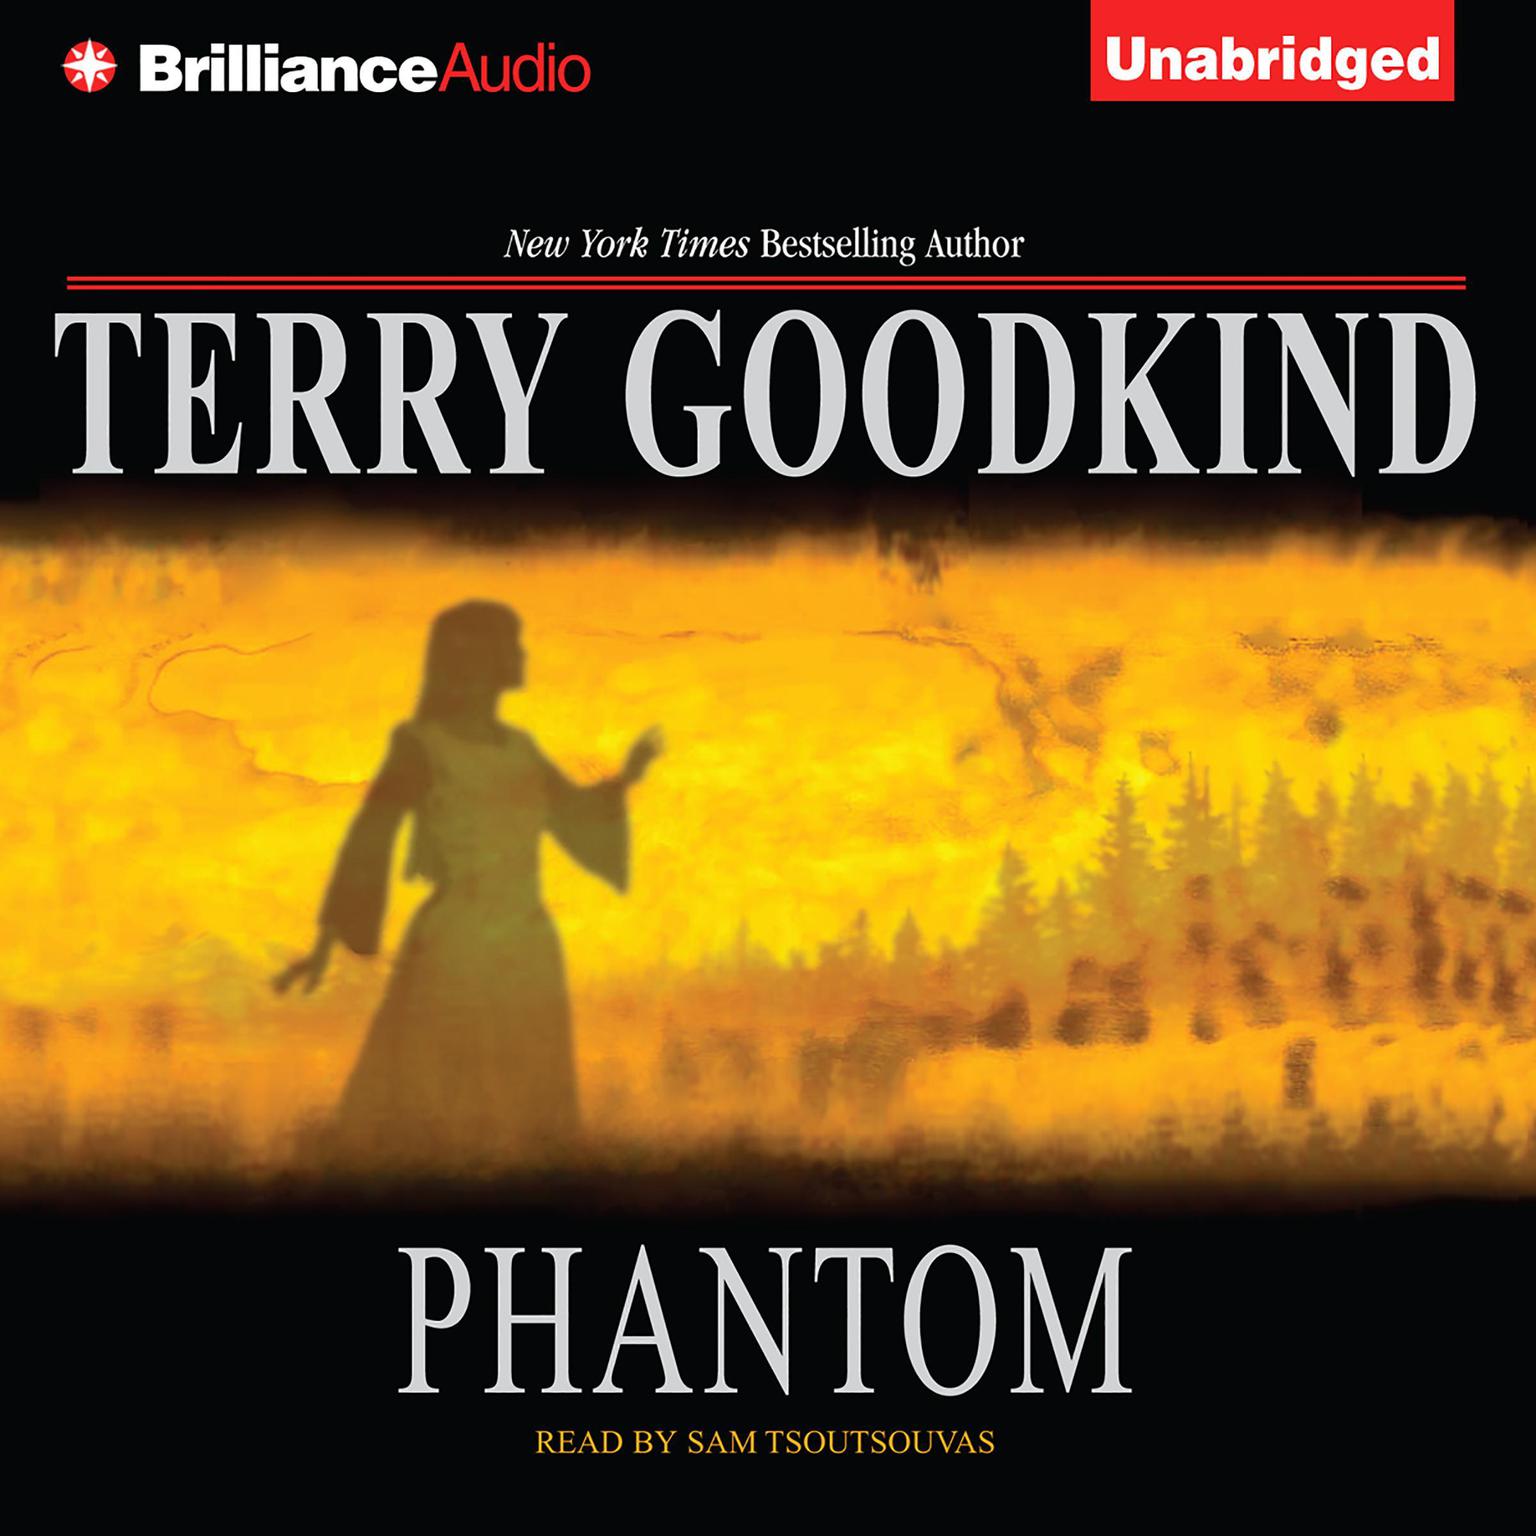 Phantom Audiobook, by Terry Goodkind